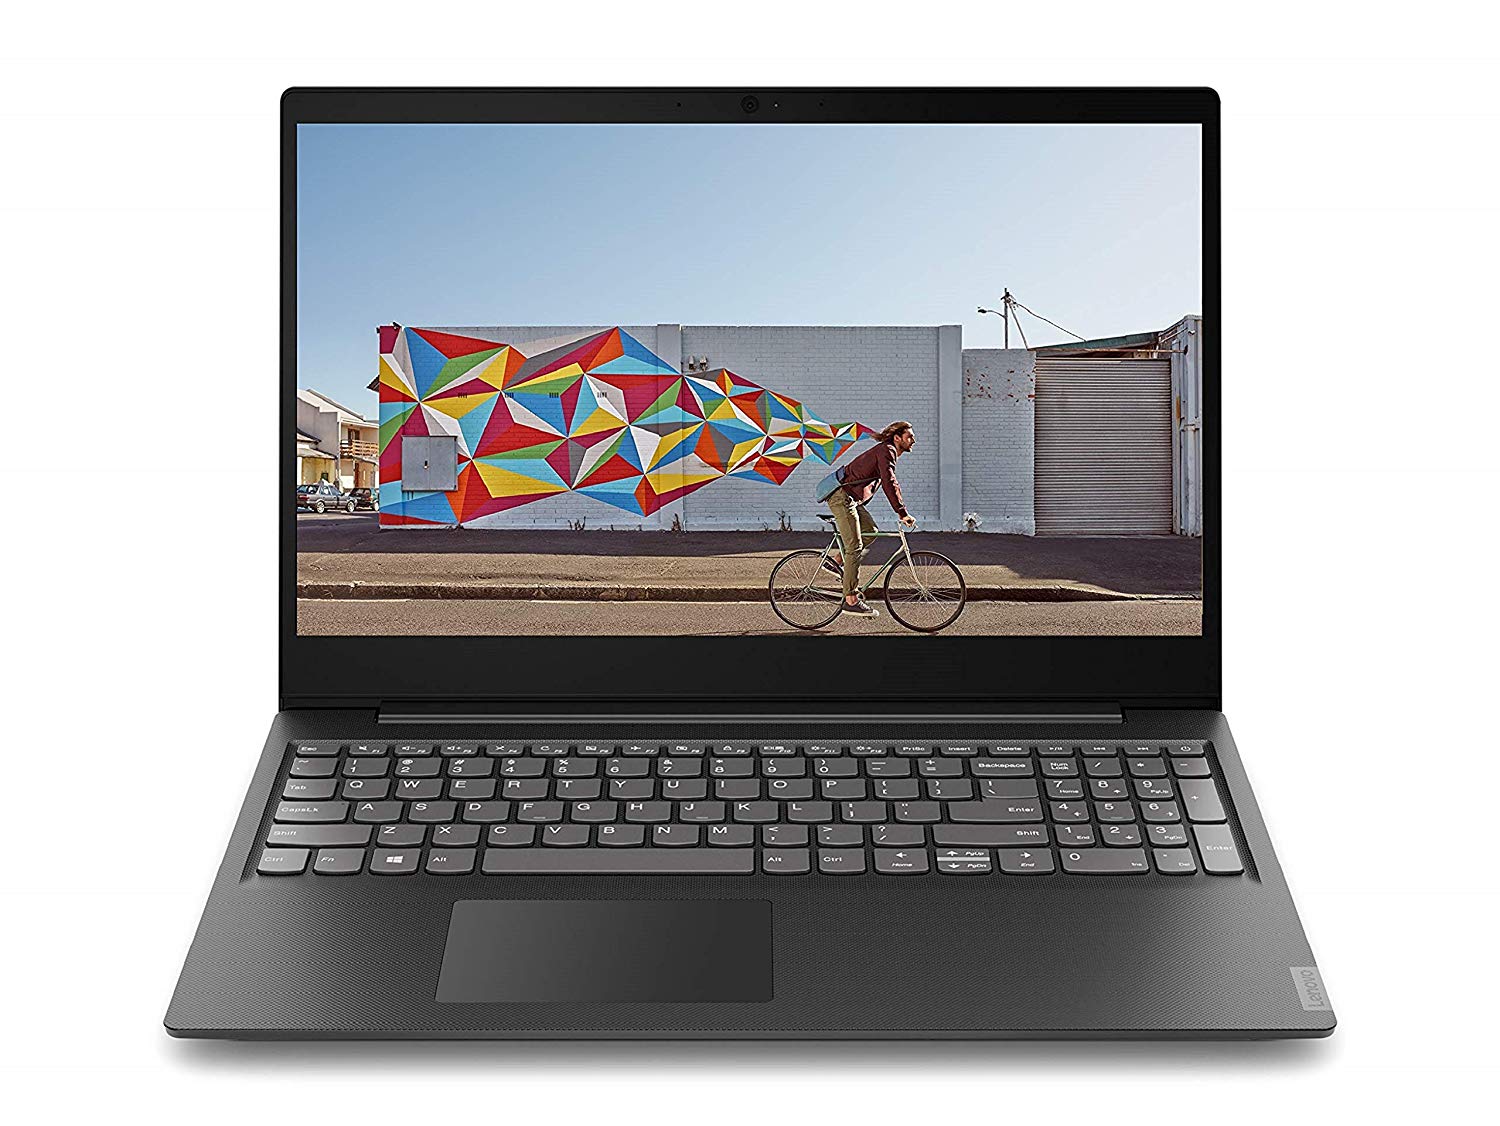 Laptops brand new